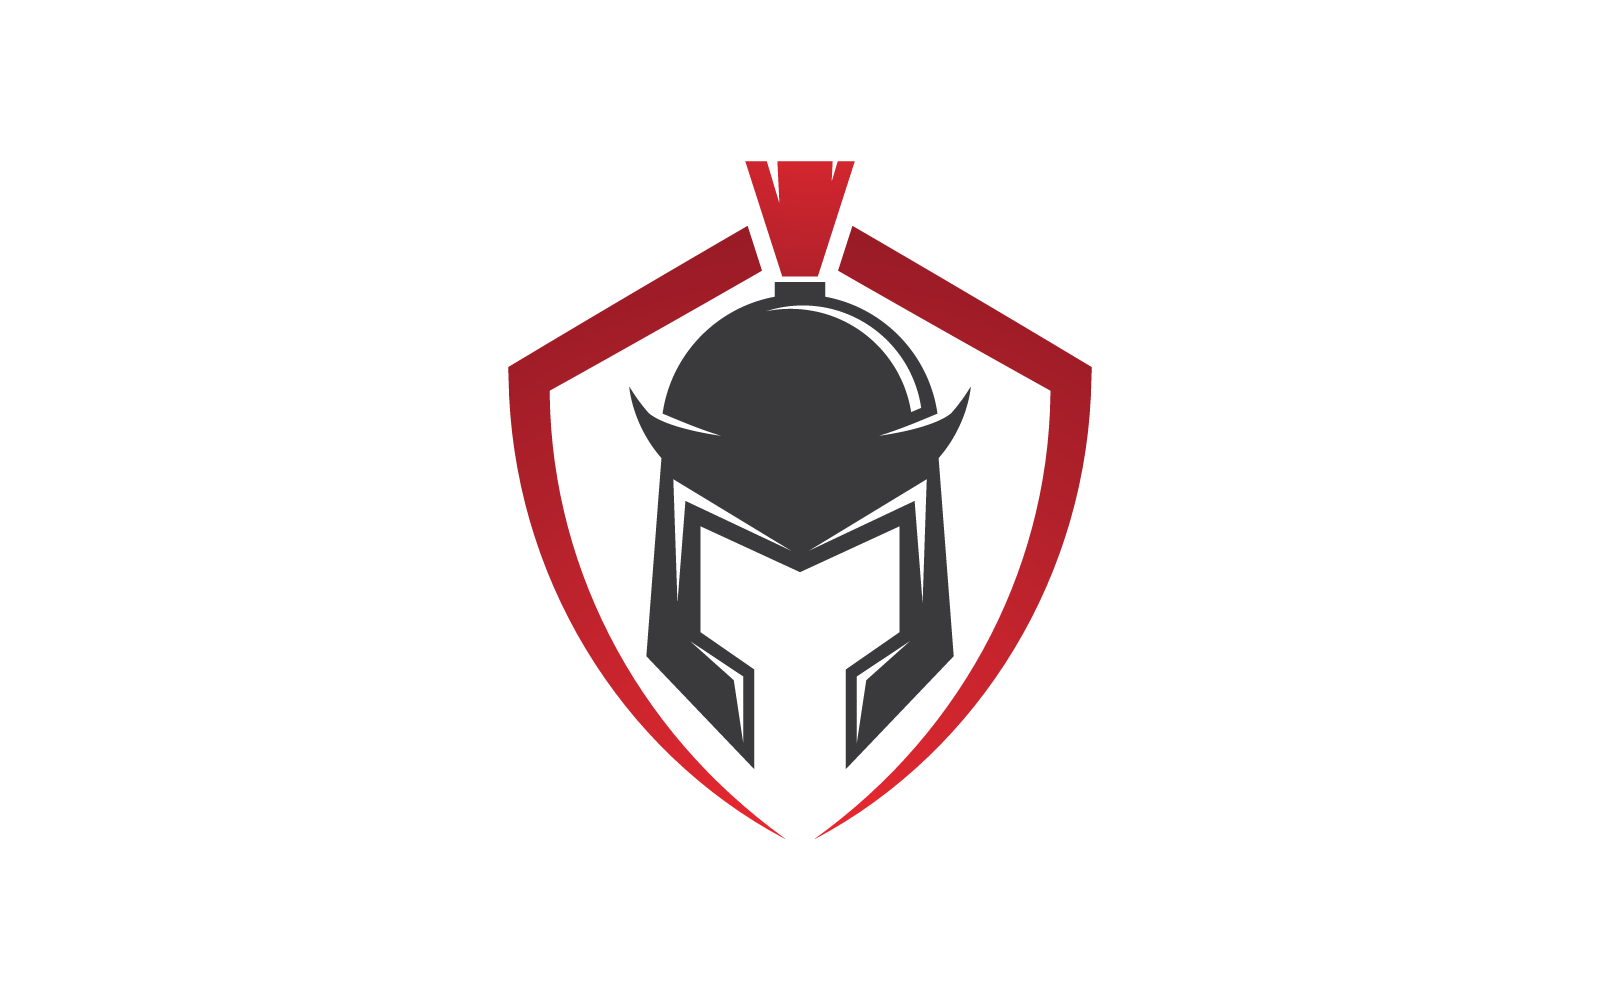 Spartan gladiator logo vector flat design